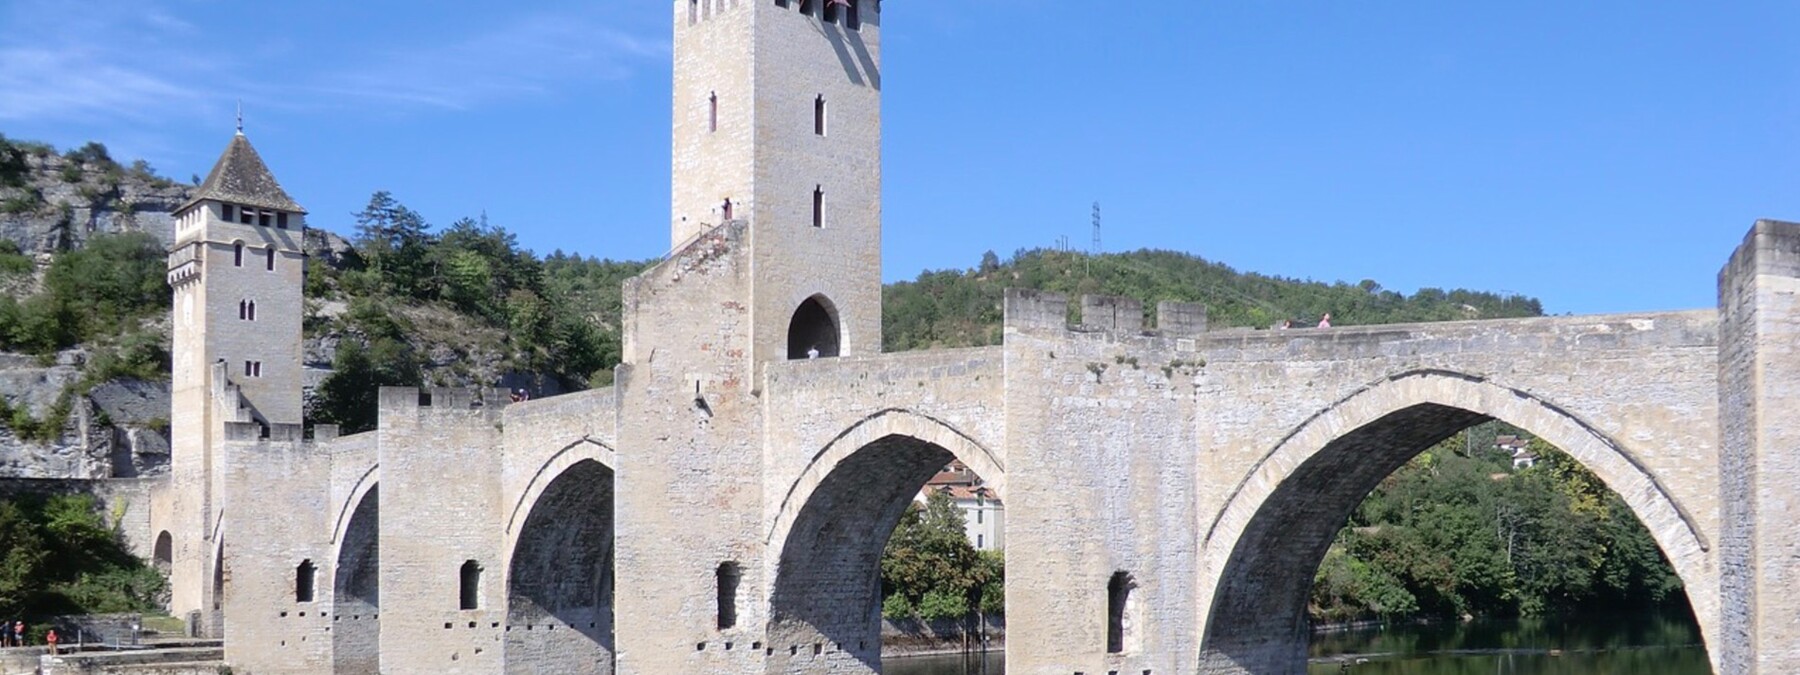 Lot Aveyron Tarn Cahors, Rodez, Millau, Albi